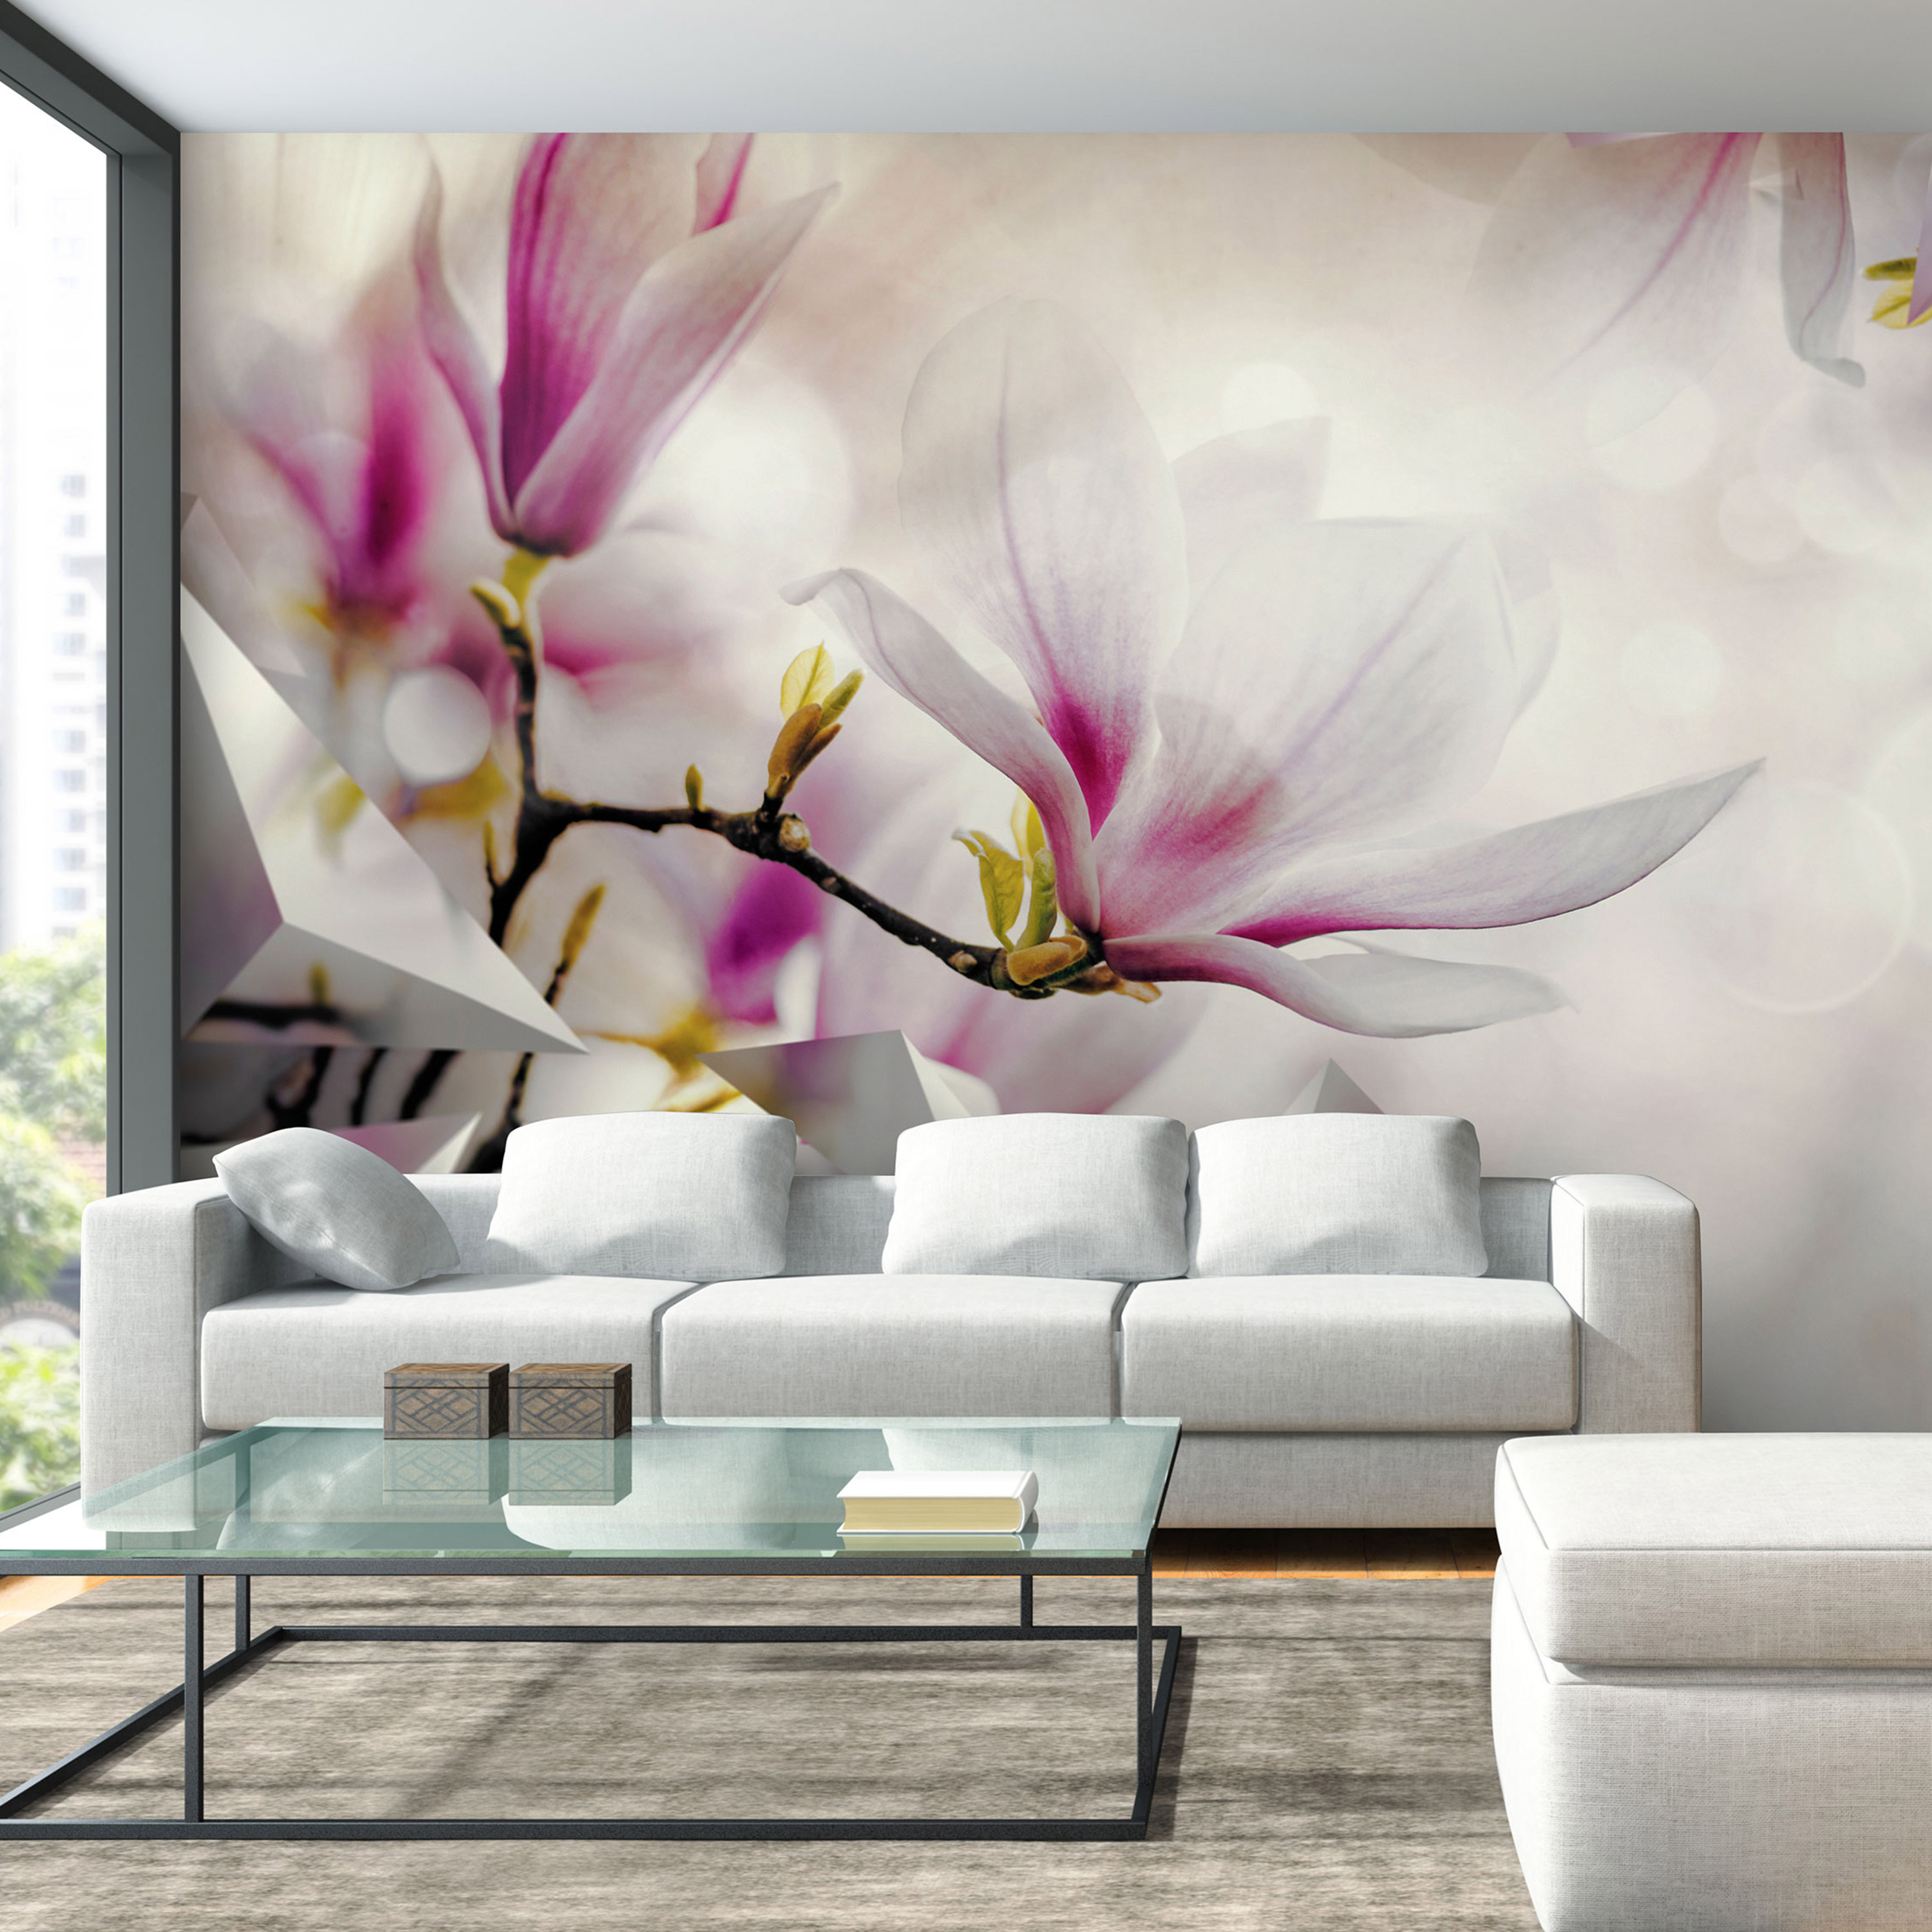 Self-adhesive Wallpaper - Subtle Magnolias - Third Variant - 196x140